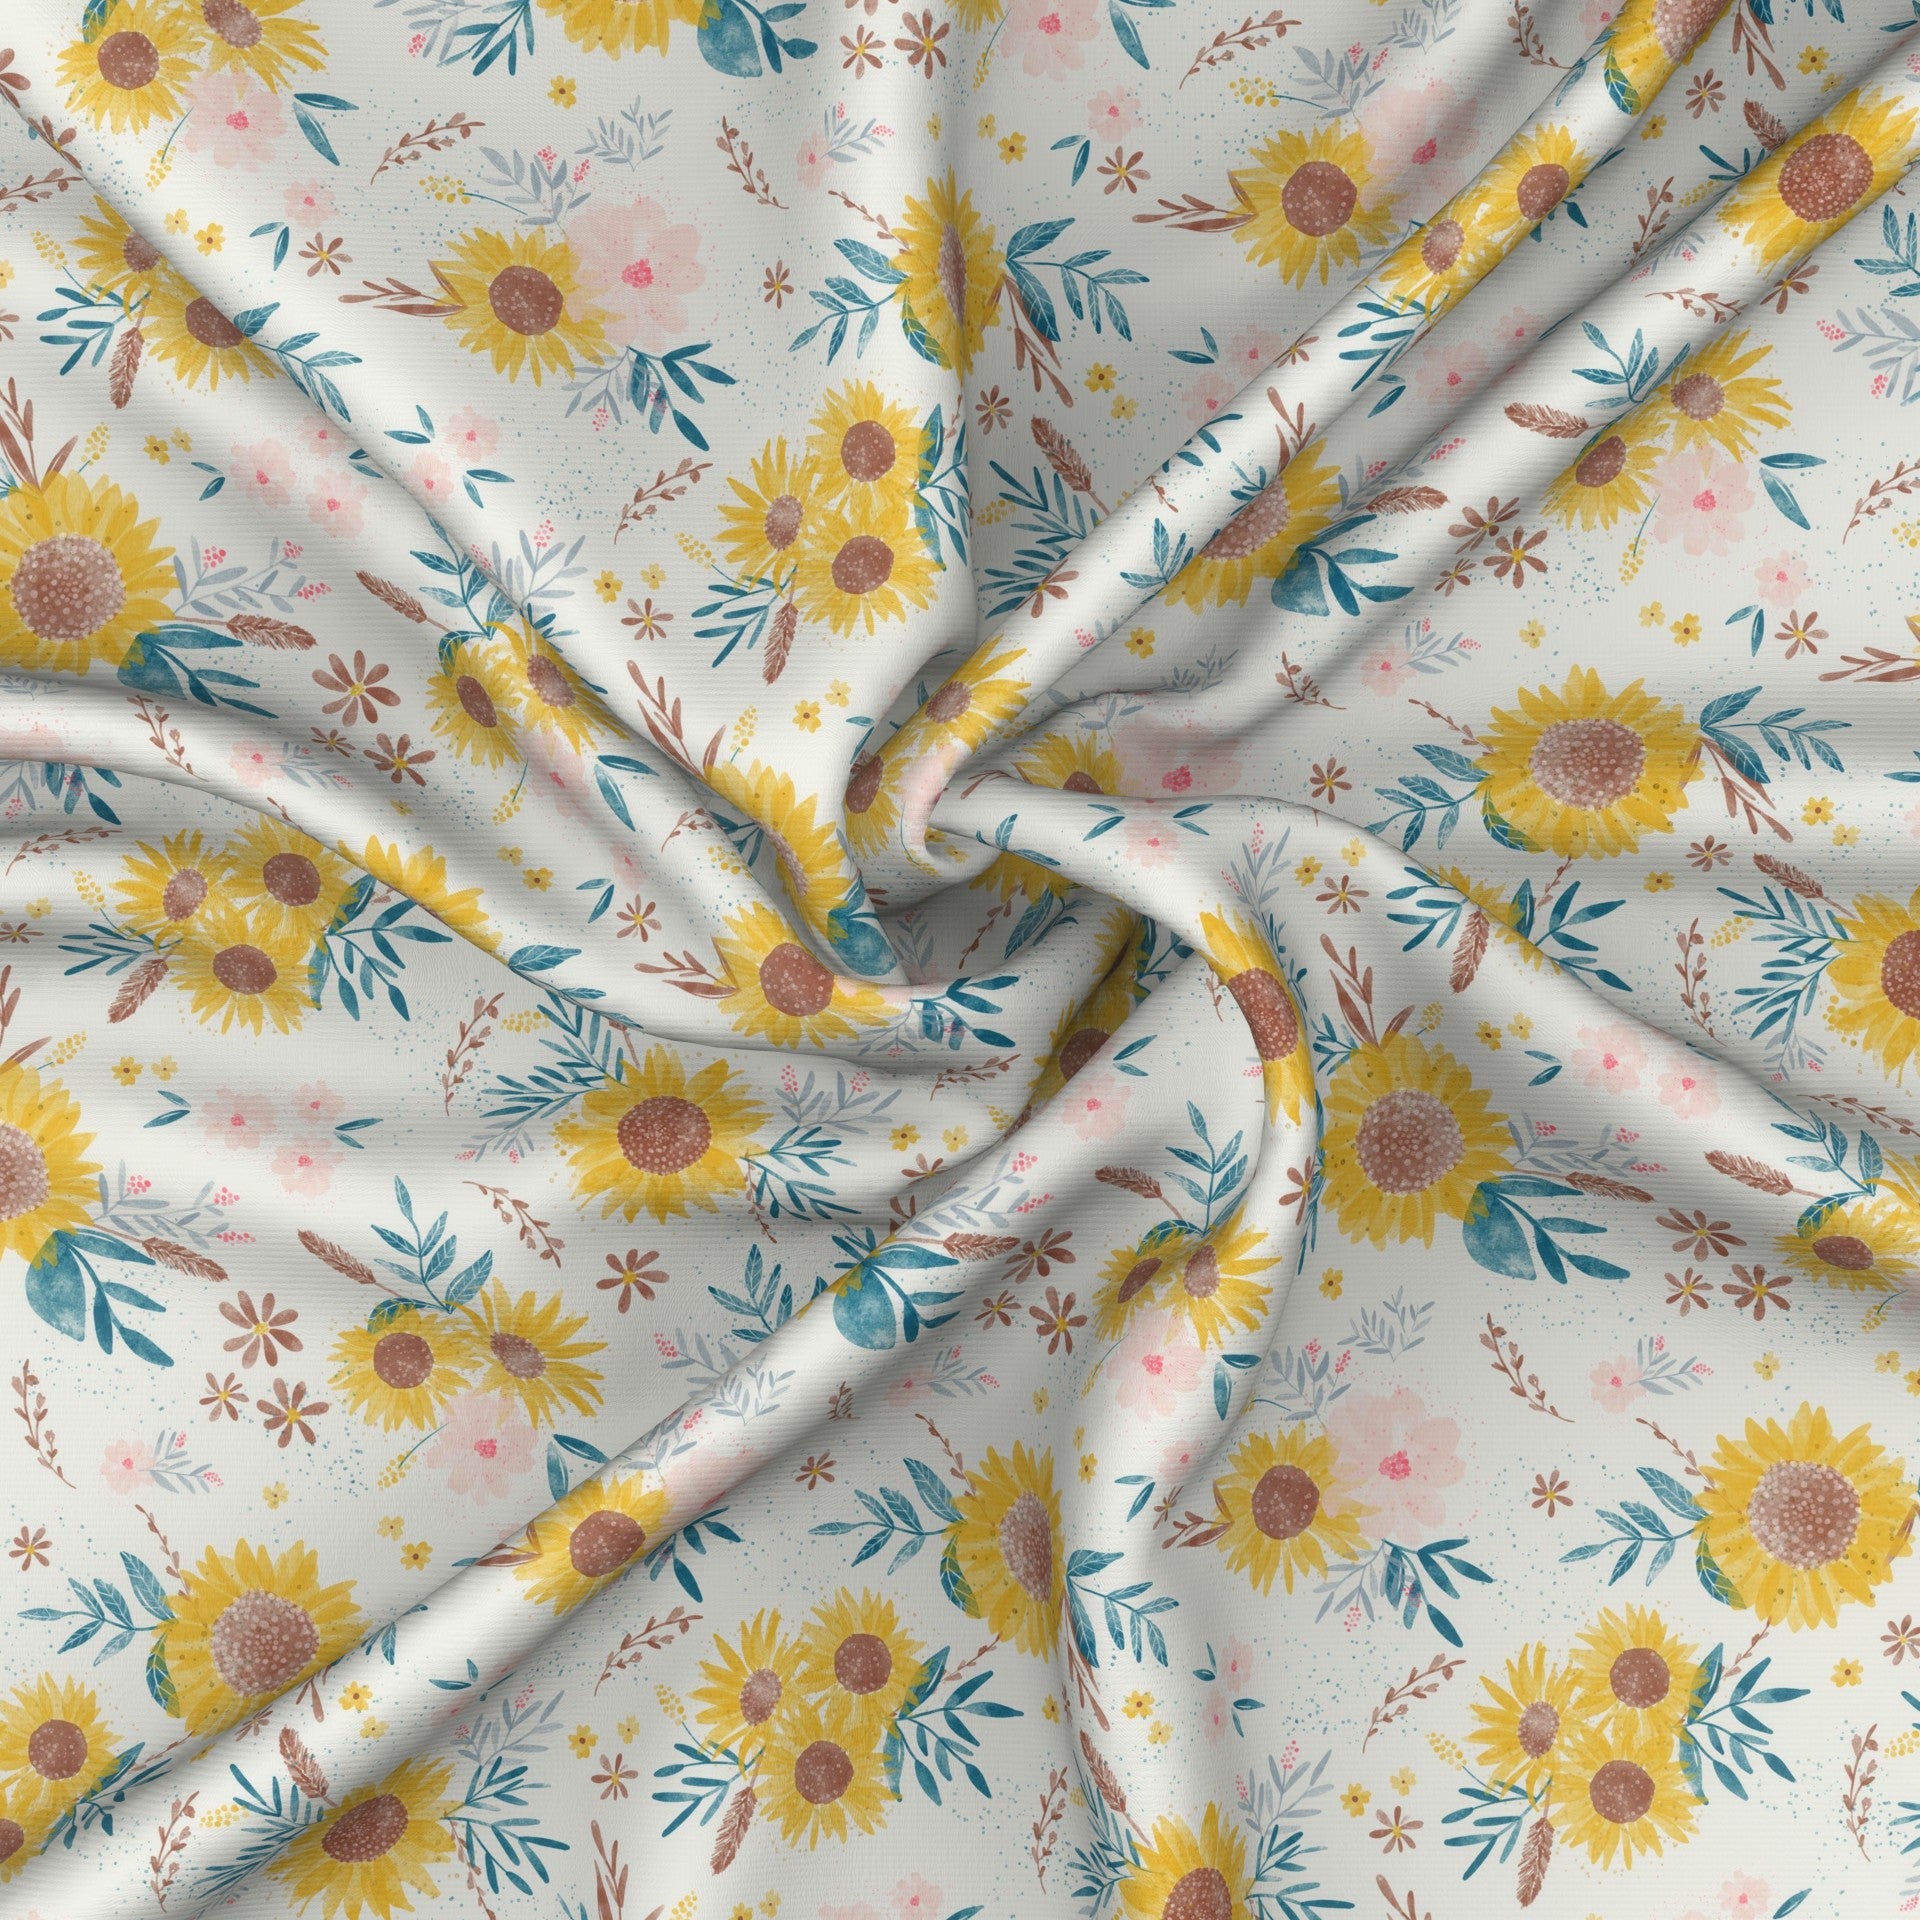 Watercolor Sunflowers on Beige | Sunflower Fields Forever by Kim Henrie Fabric, Raspberry Creek Fabrics